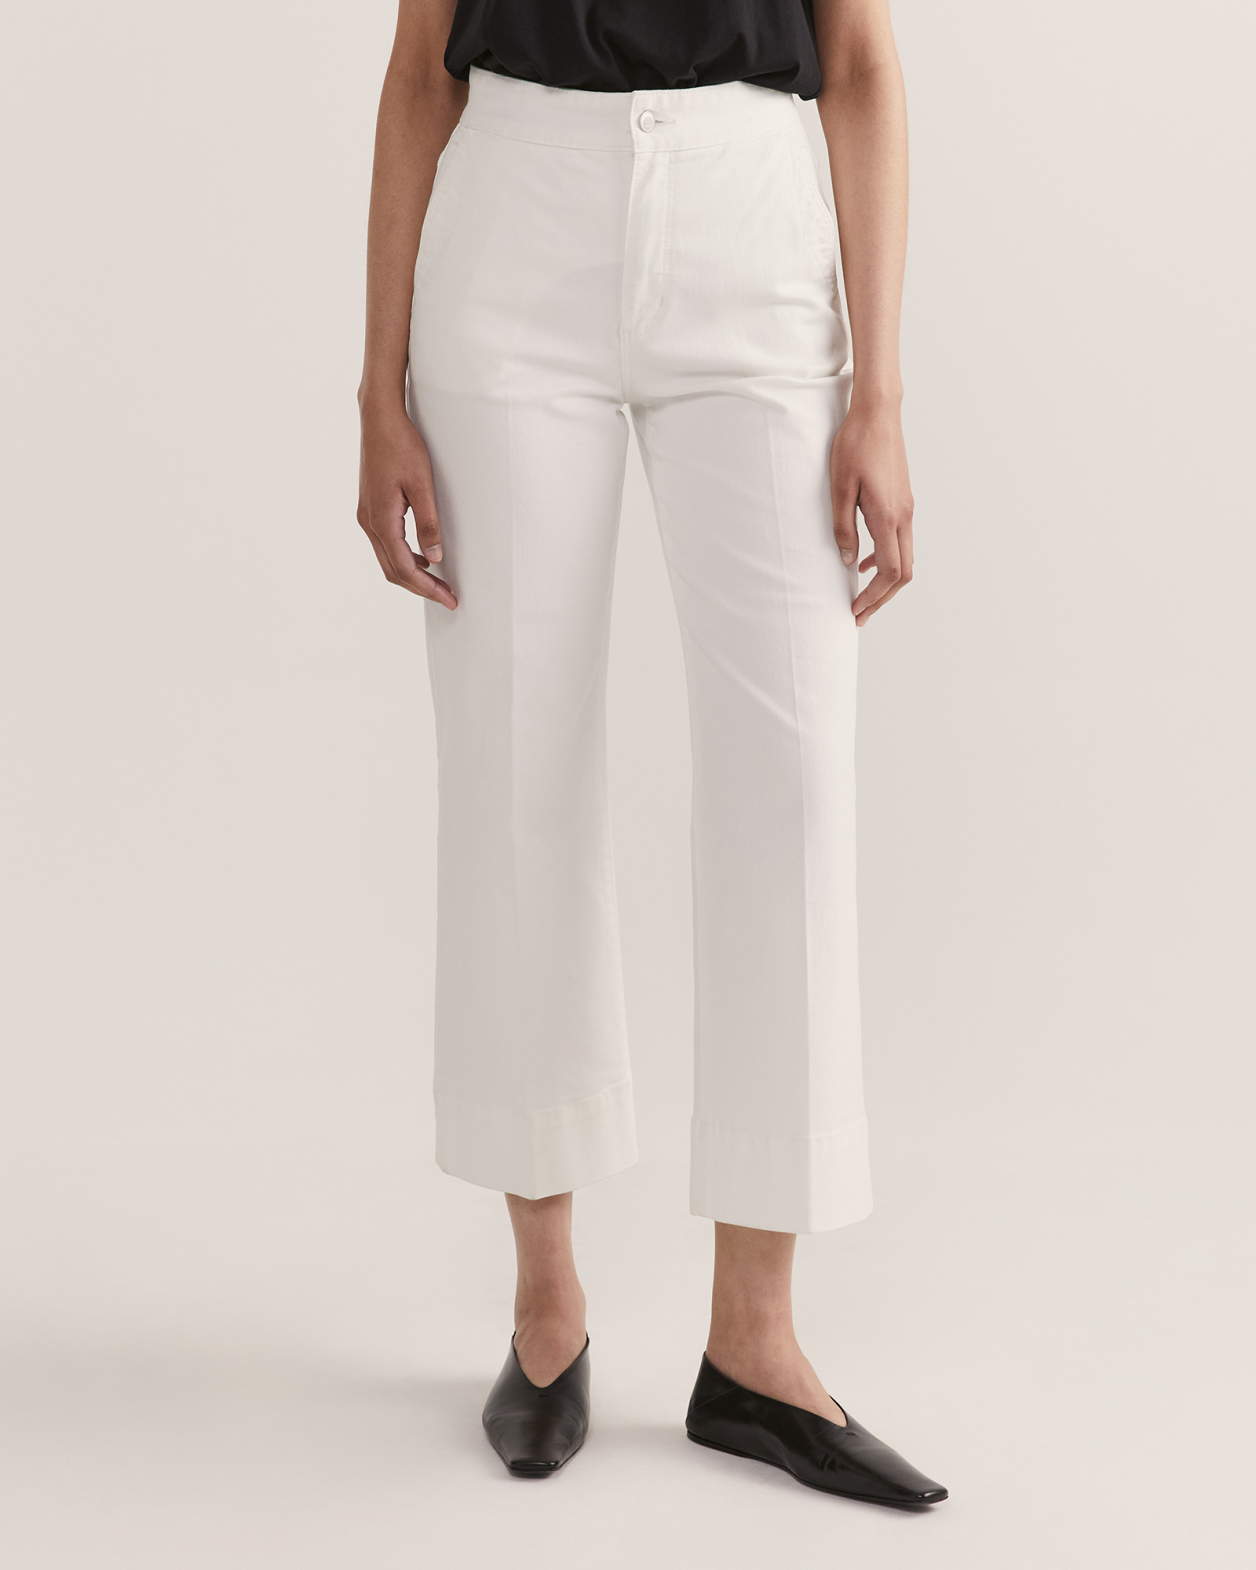 Ava Cropped Wide Leg Jean in WHITE